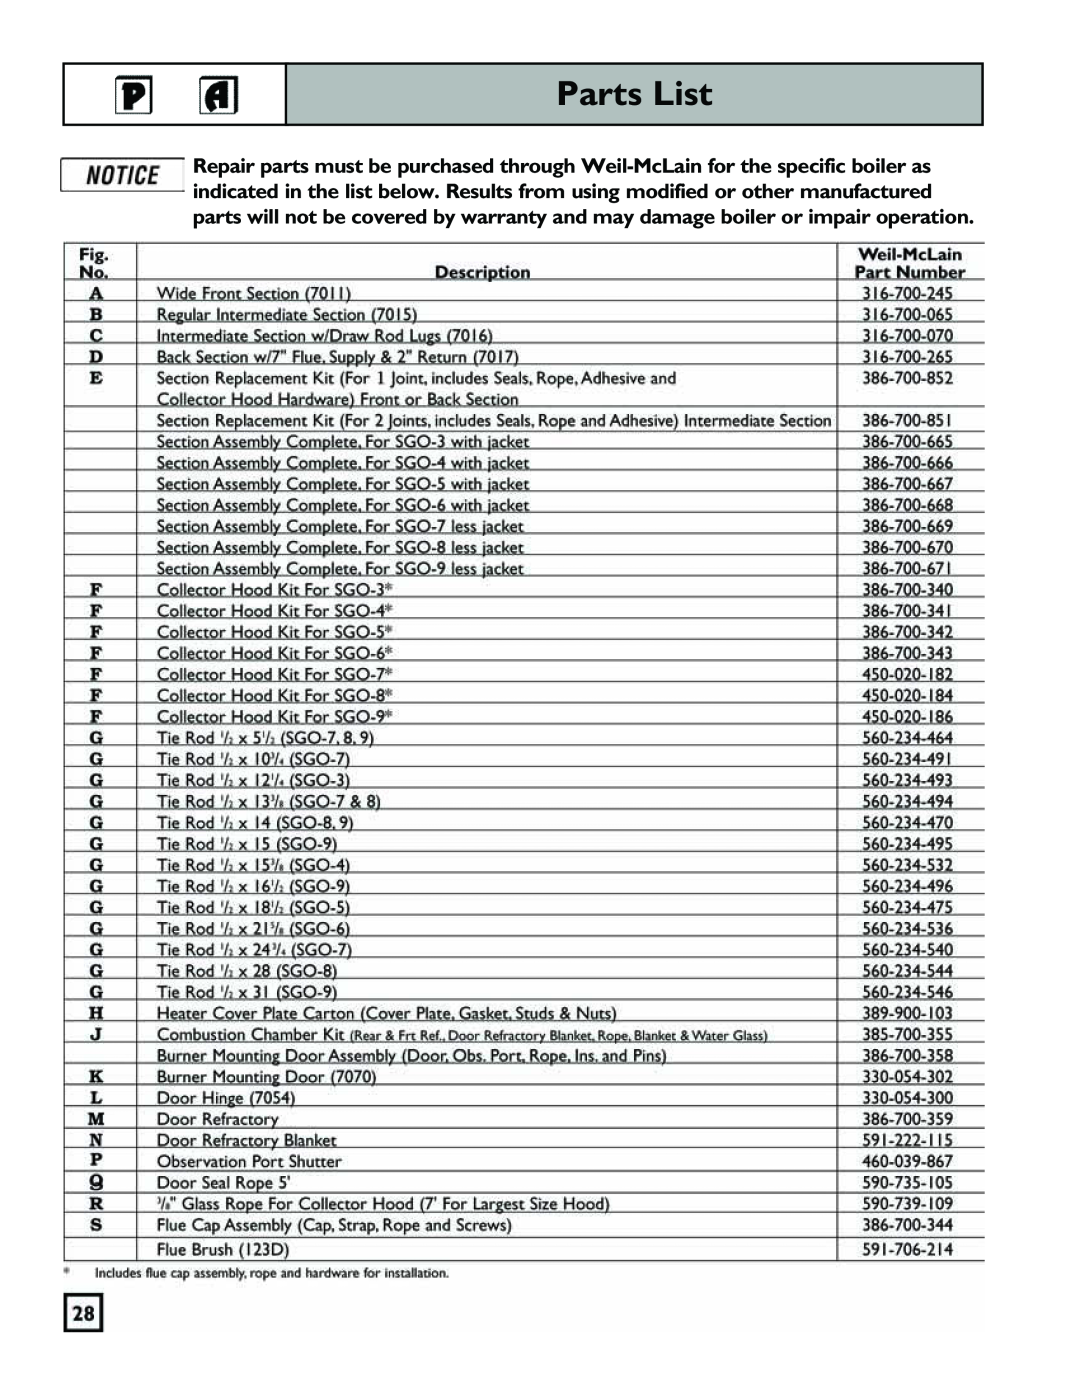 Weil-McLain 550-141-829/1201 manual Parts List 